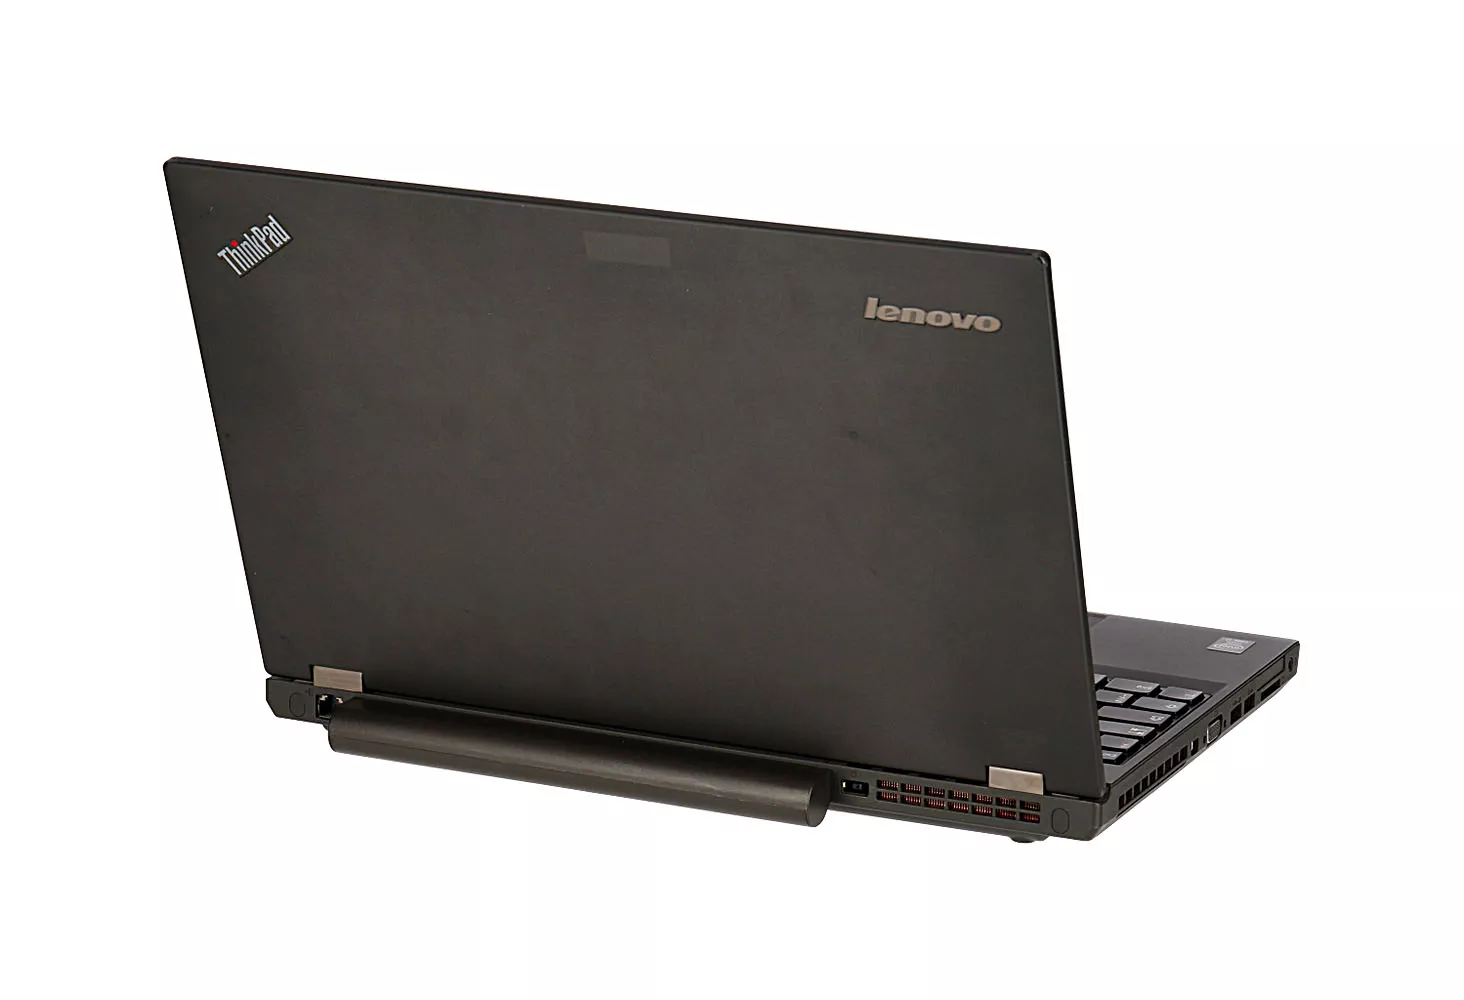 Lenovo ThinkPad W541 Quad Core i7 4810QM 2,8 GHz Webcam B-Ware